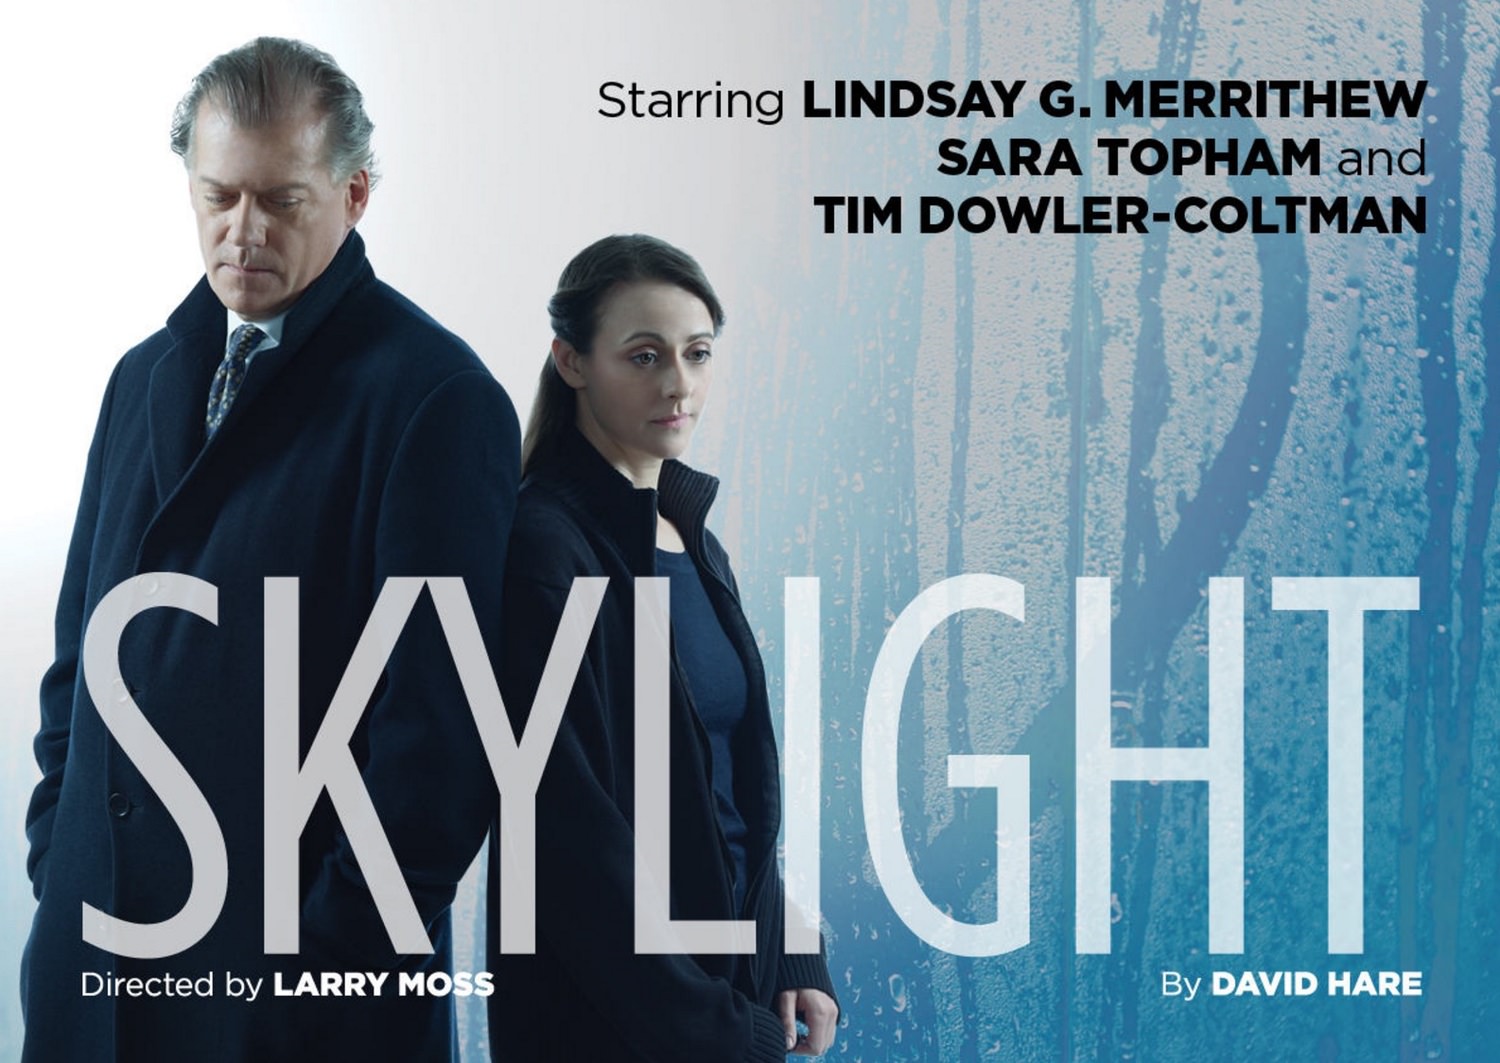 Lindsay G. Merrithew and Sara Topham in David Hare's 'Skylight'.